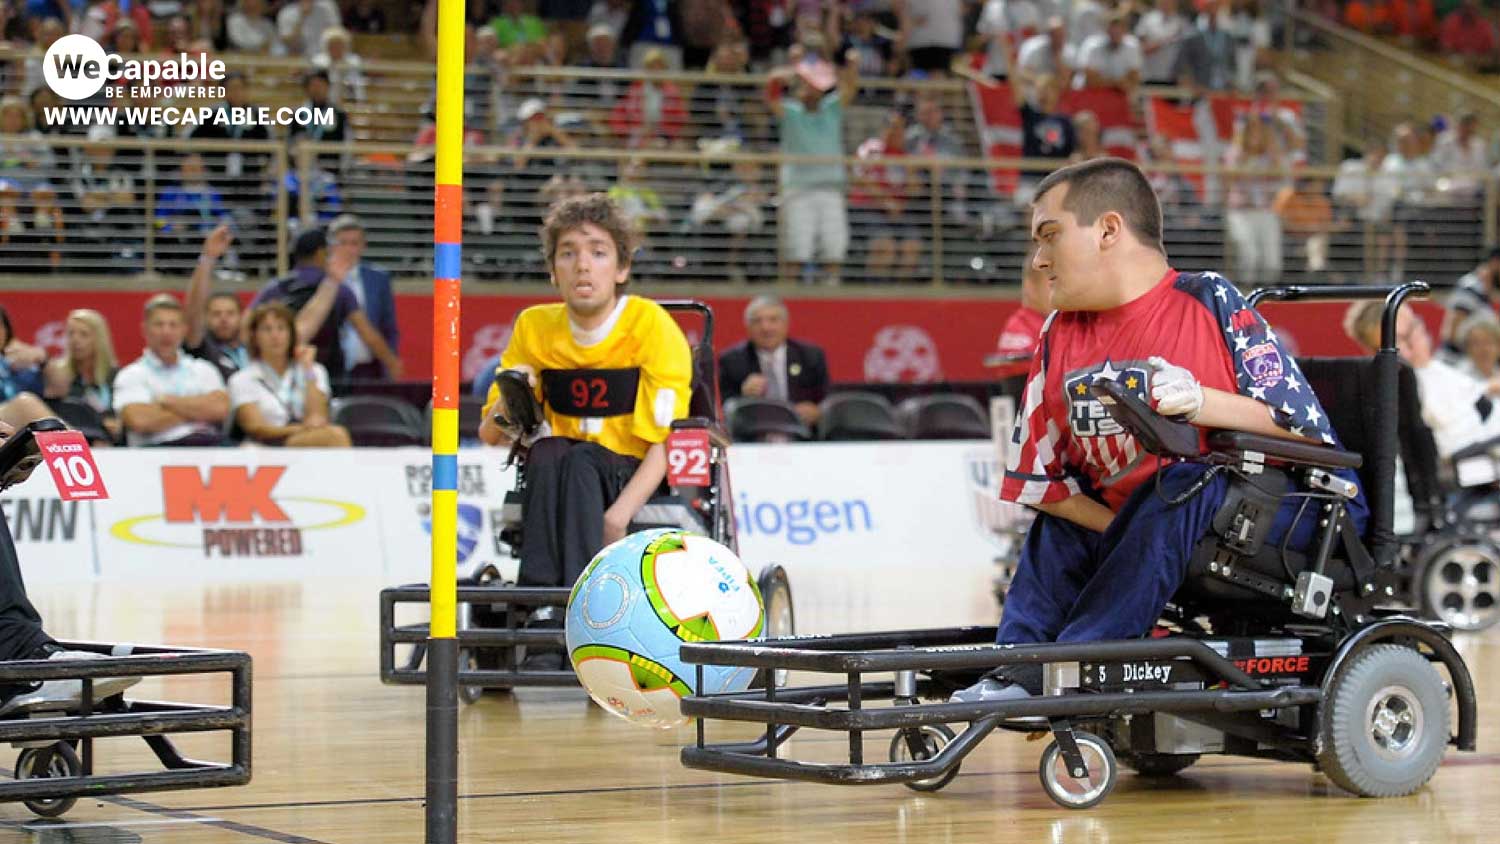 a power soccer or wheelchair football match underway